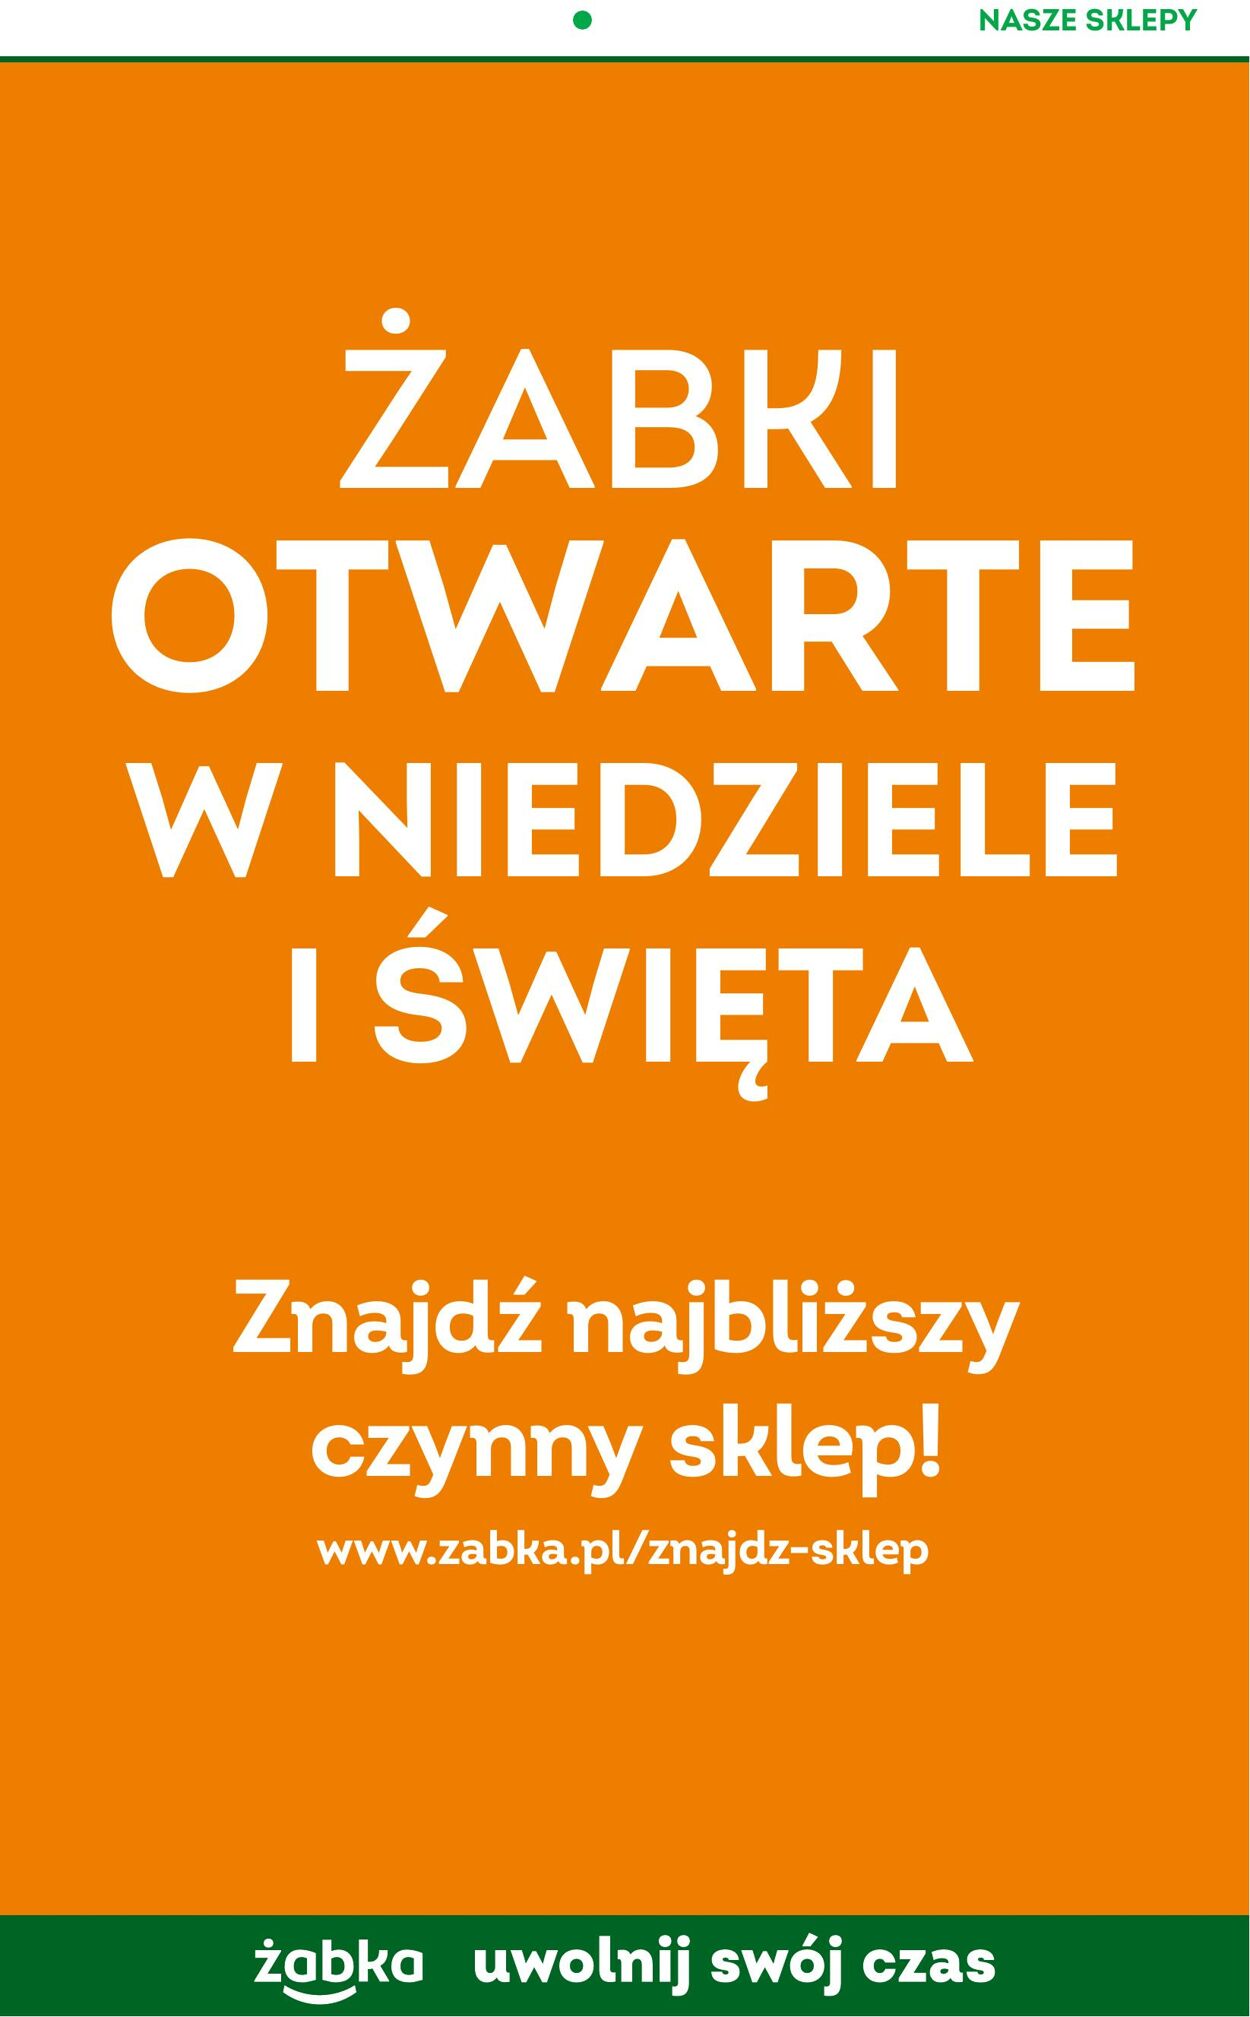 Gazetka Żabka 21.12.2022 - 03.01.2023